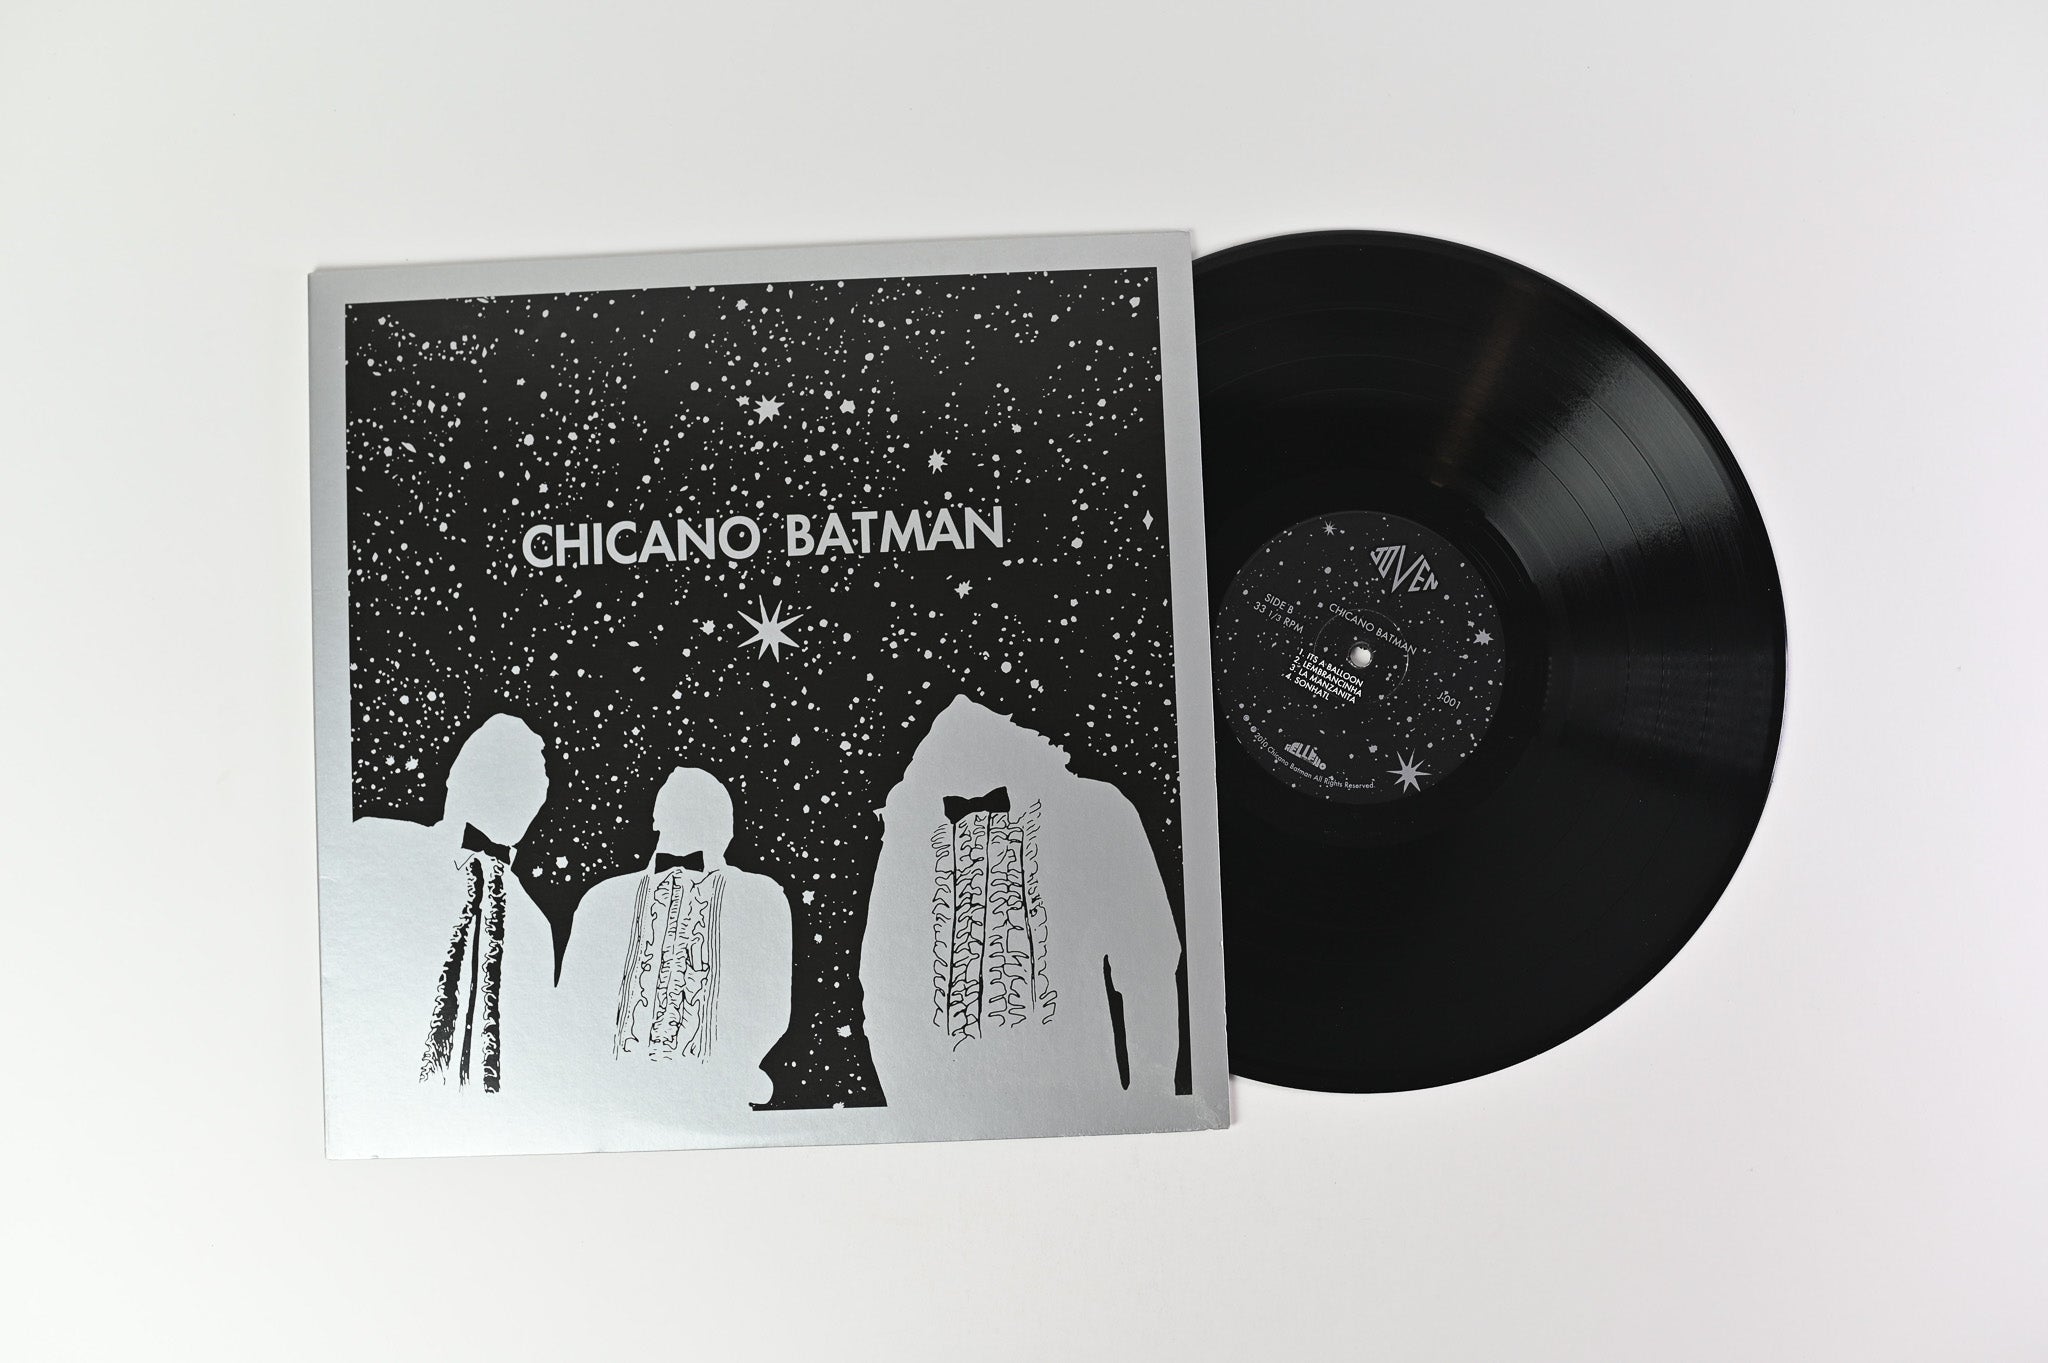 Chicano Batman - Chicano Batman on Joven Reissue